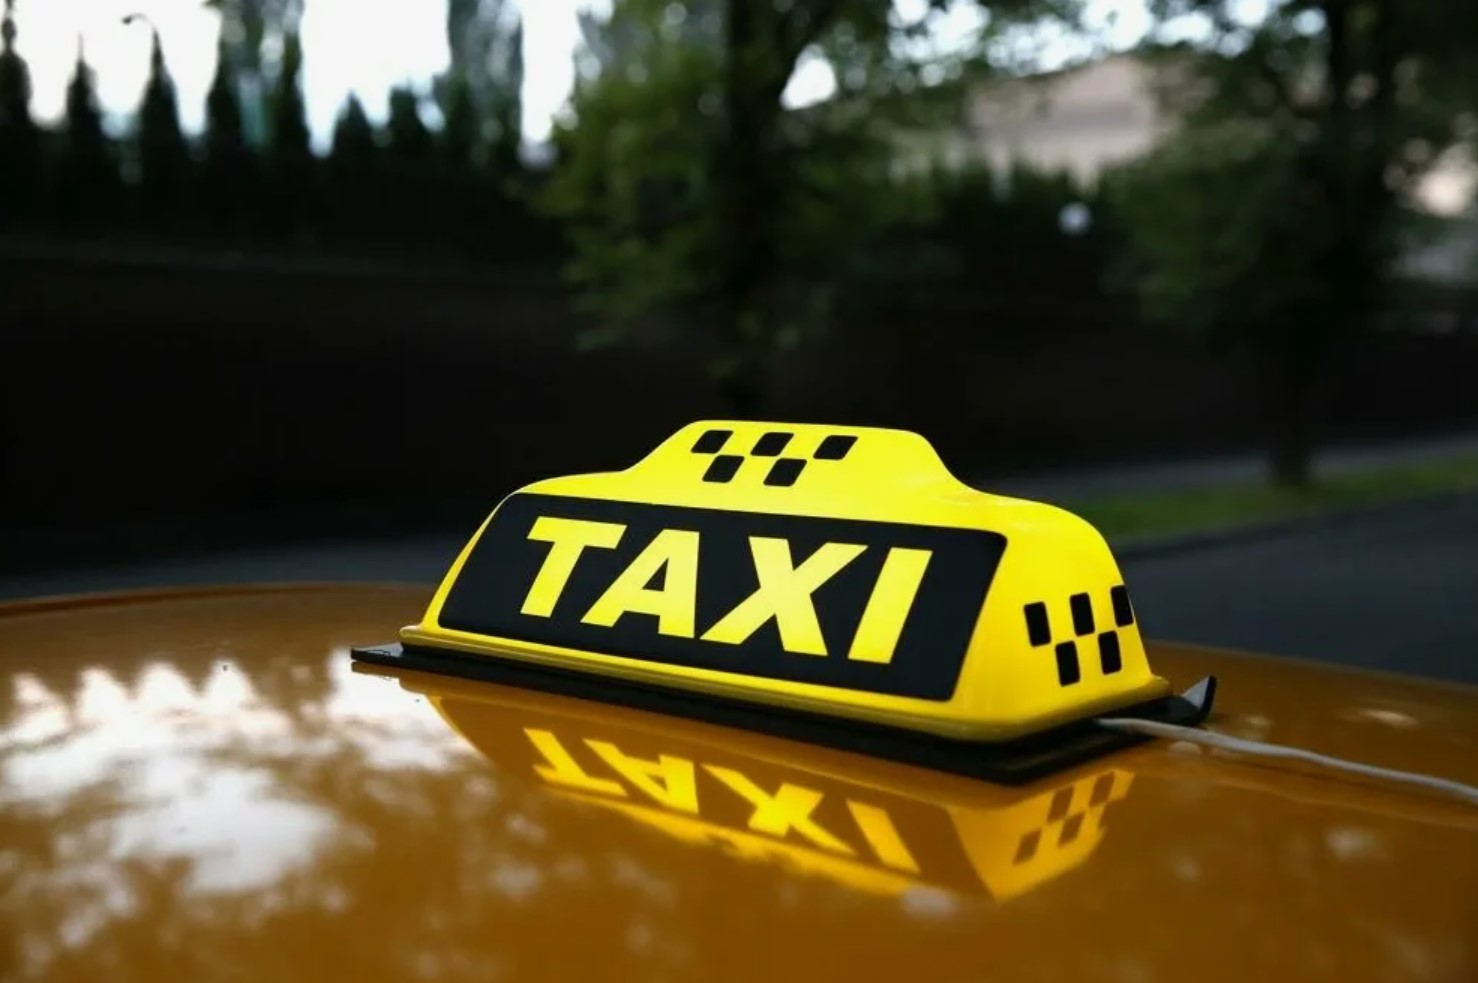 Mujeva такси. Шашки такси. Шашечки такси. Шашки такси на машине. Машина "такси".